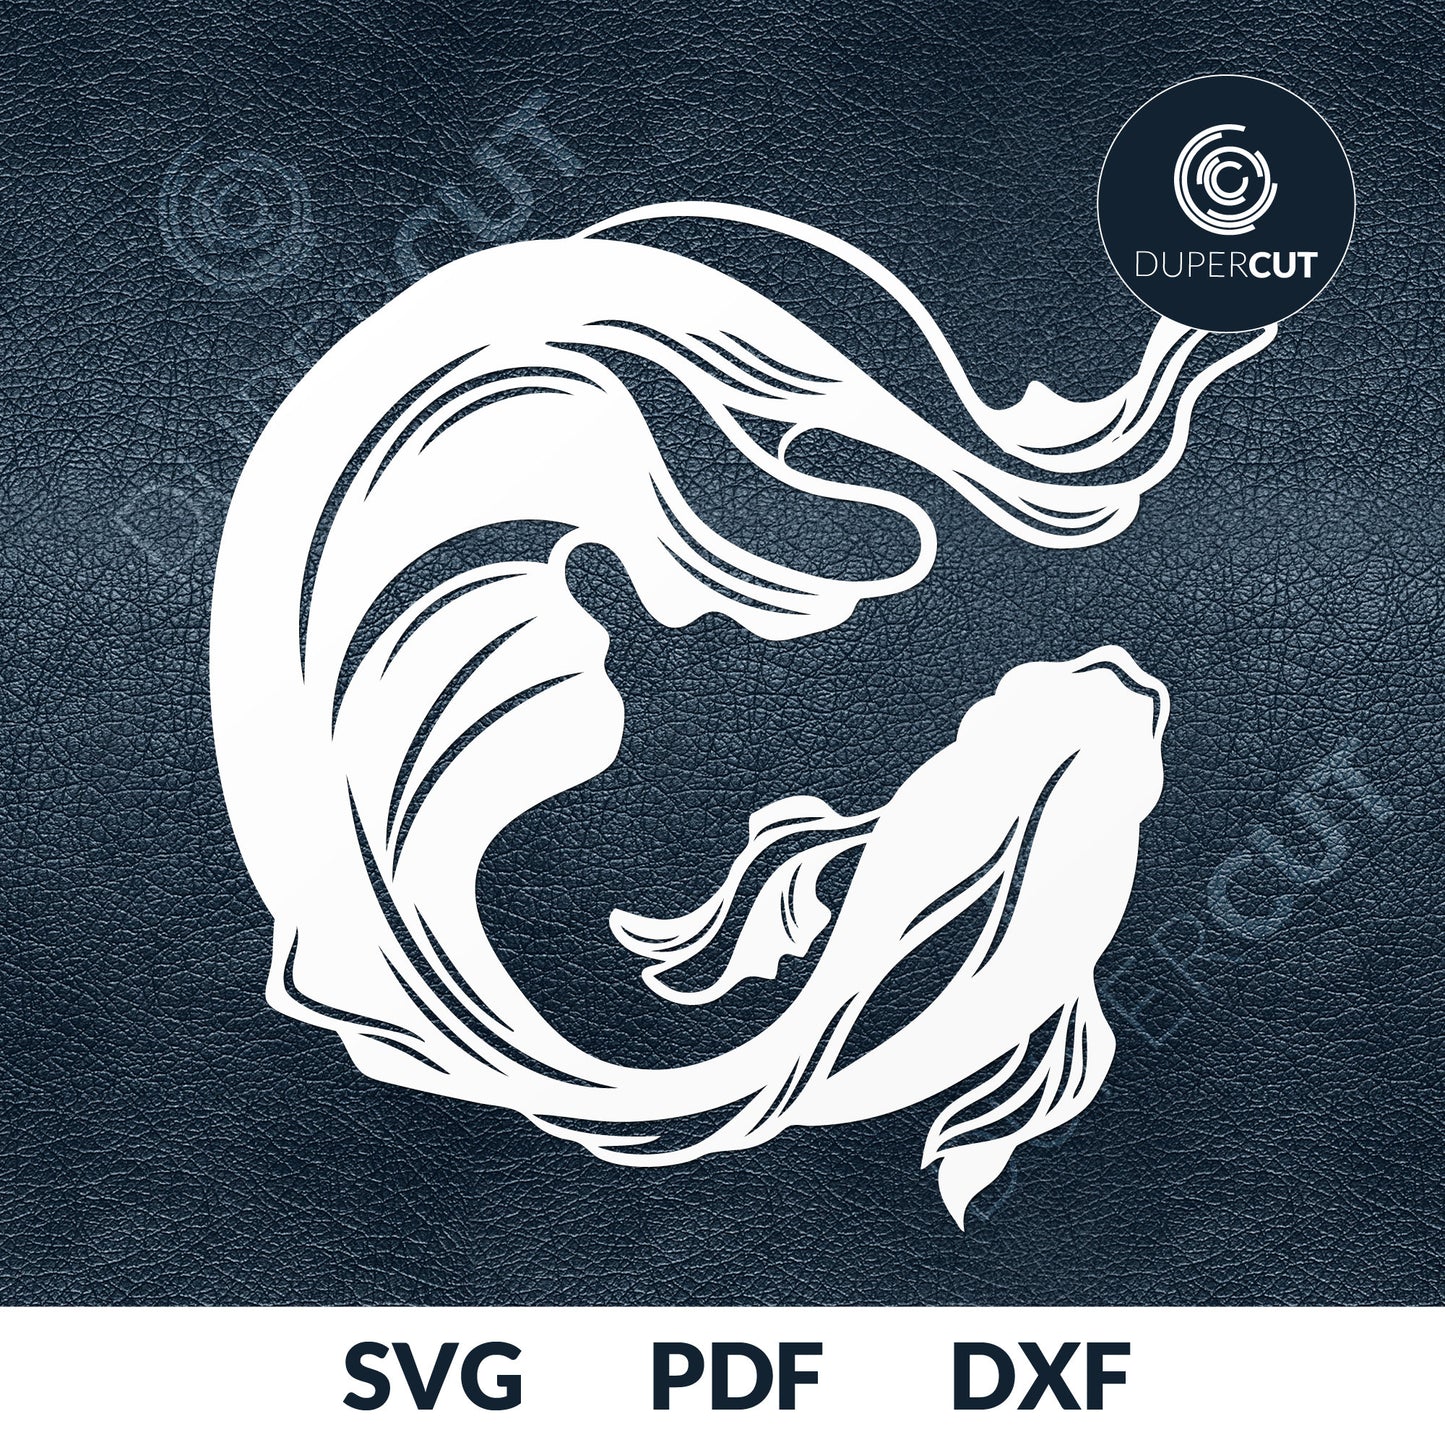 2 Designs - GOLDFISH - SVG / PDF / DXF by  DuperCut.